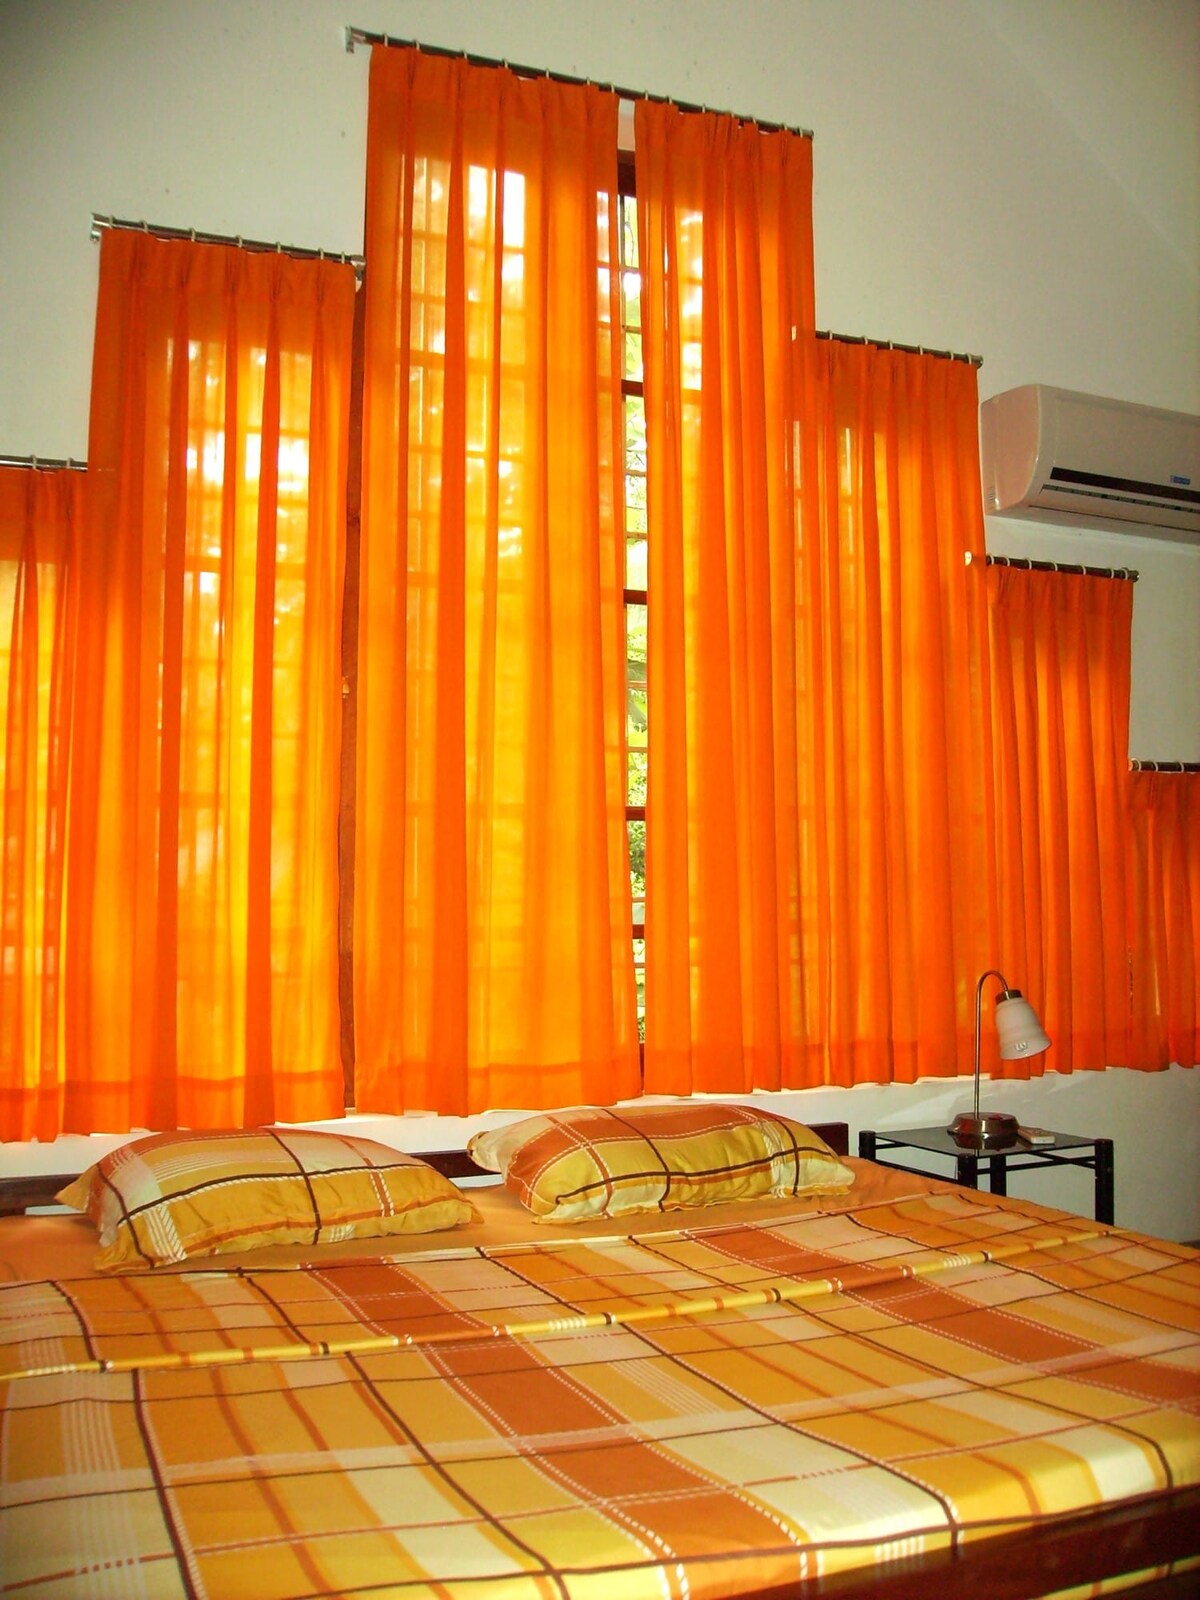 4 Bedroom House@Kottayam TownA/c